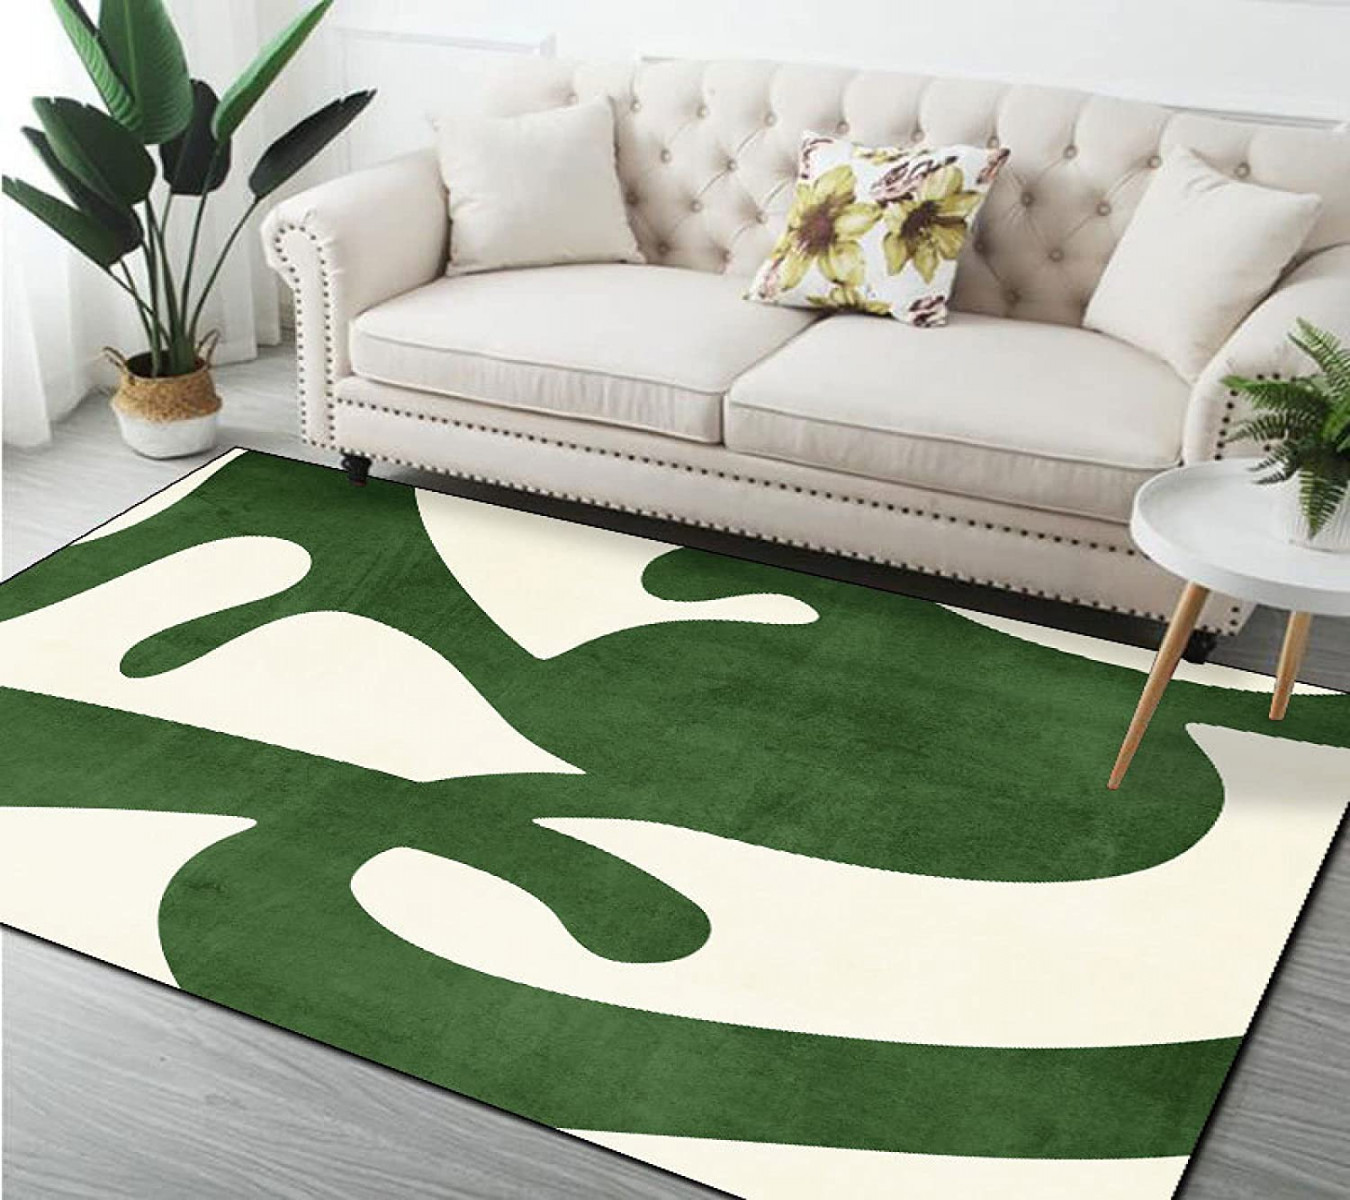 Carpet living room rugs versatile geometric plain retro green